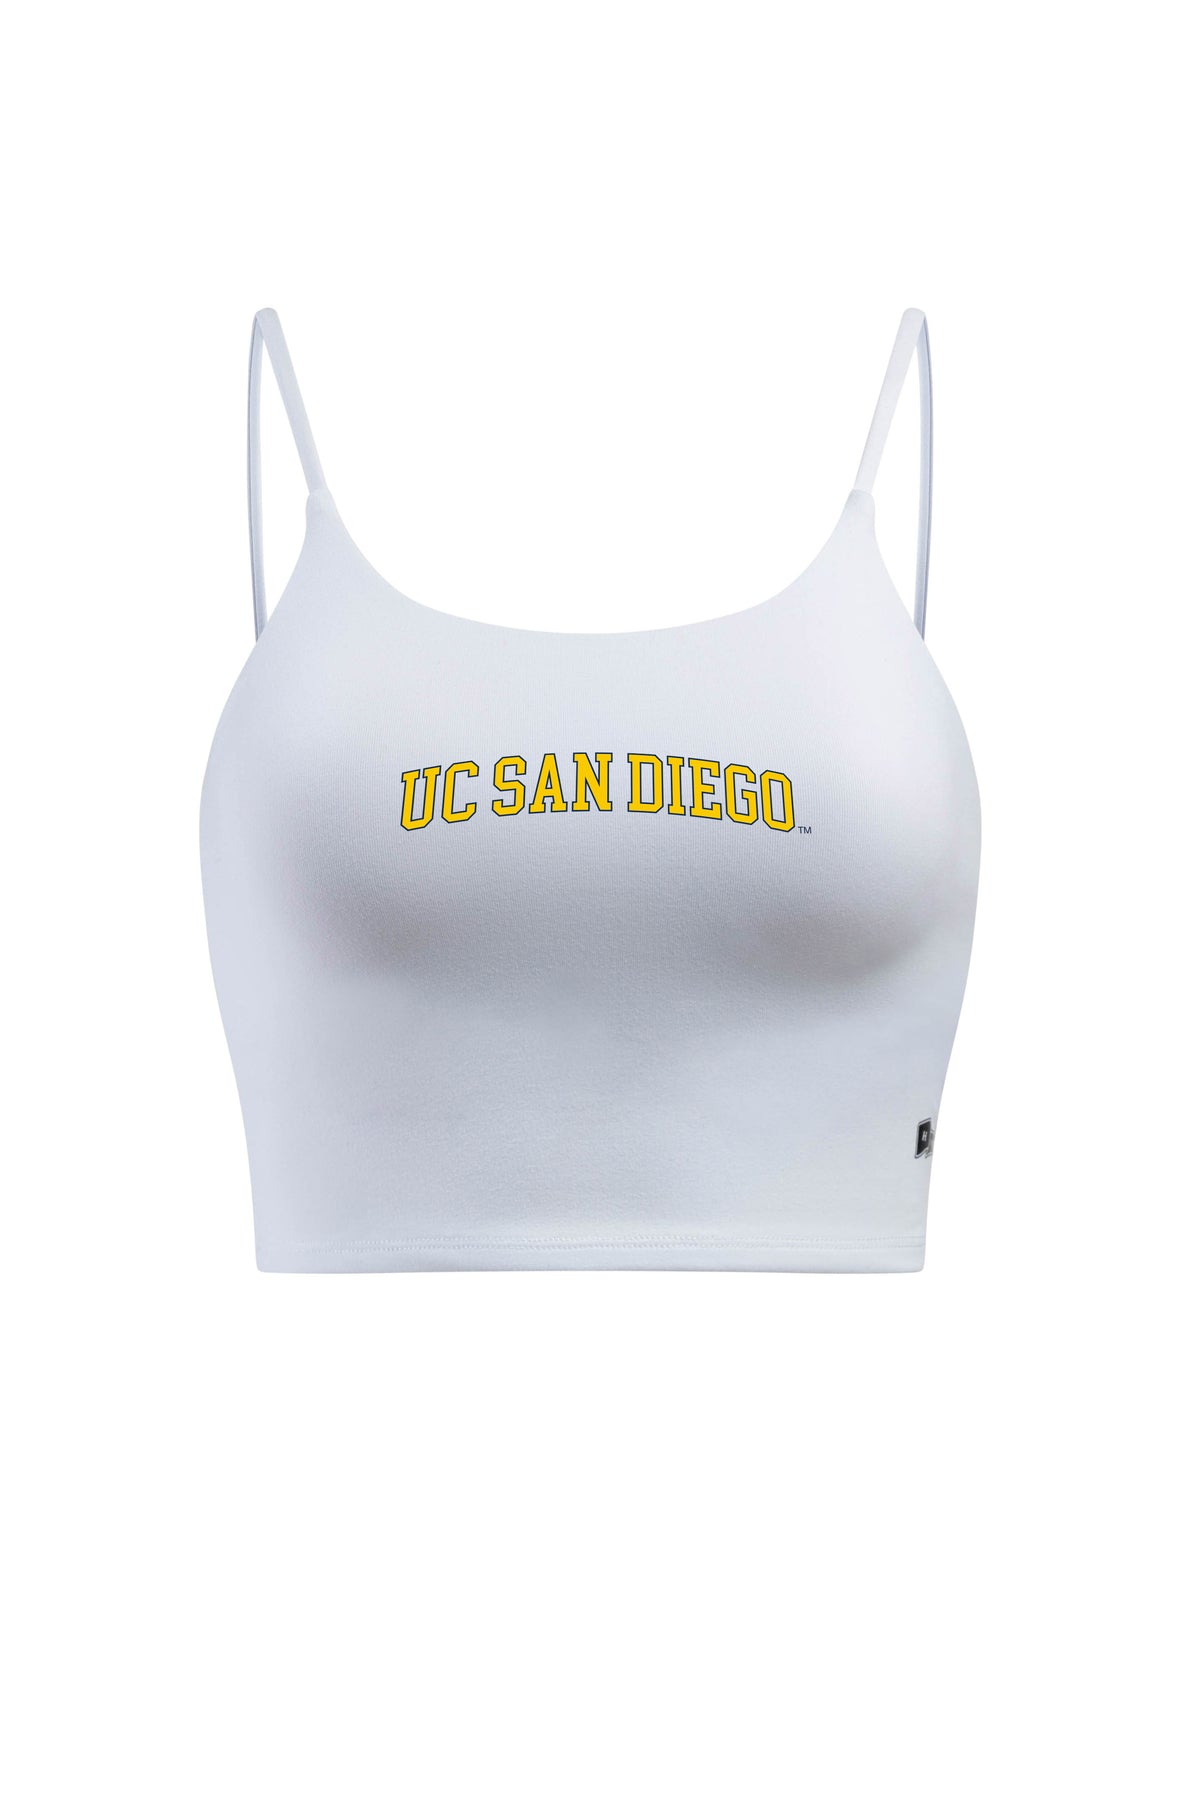 University of California San Diego Bra Tank Top